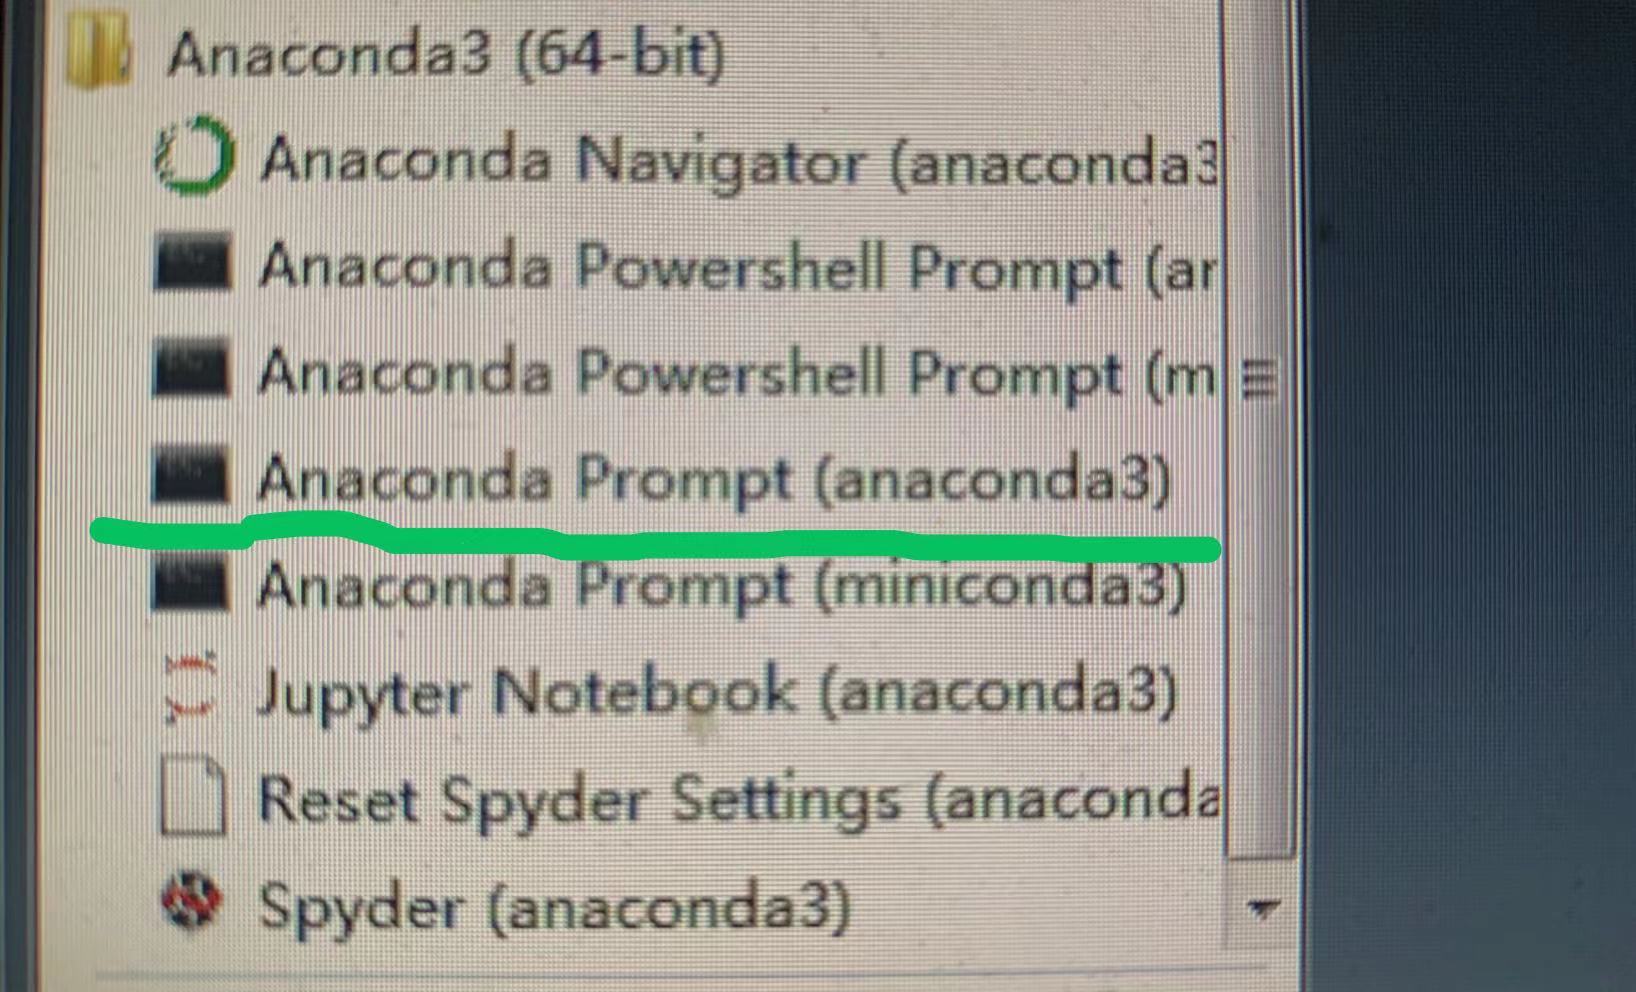 open anaconda prompt mac